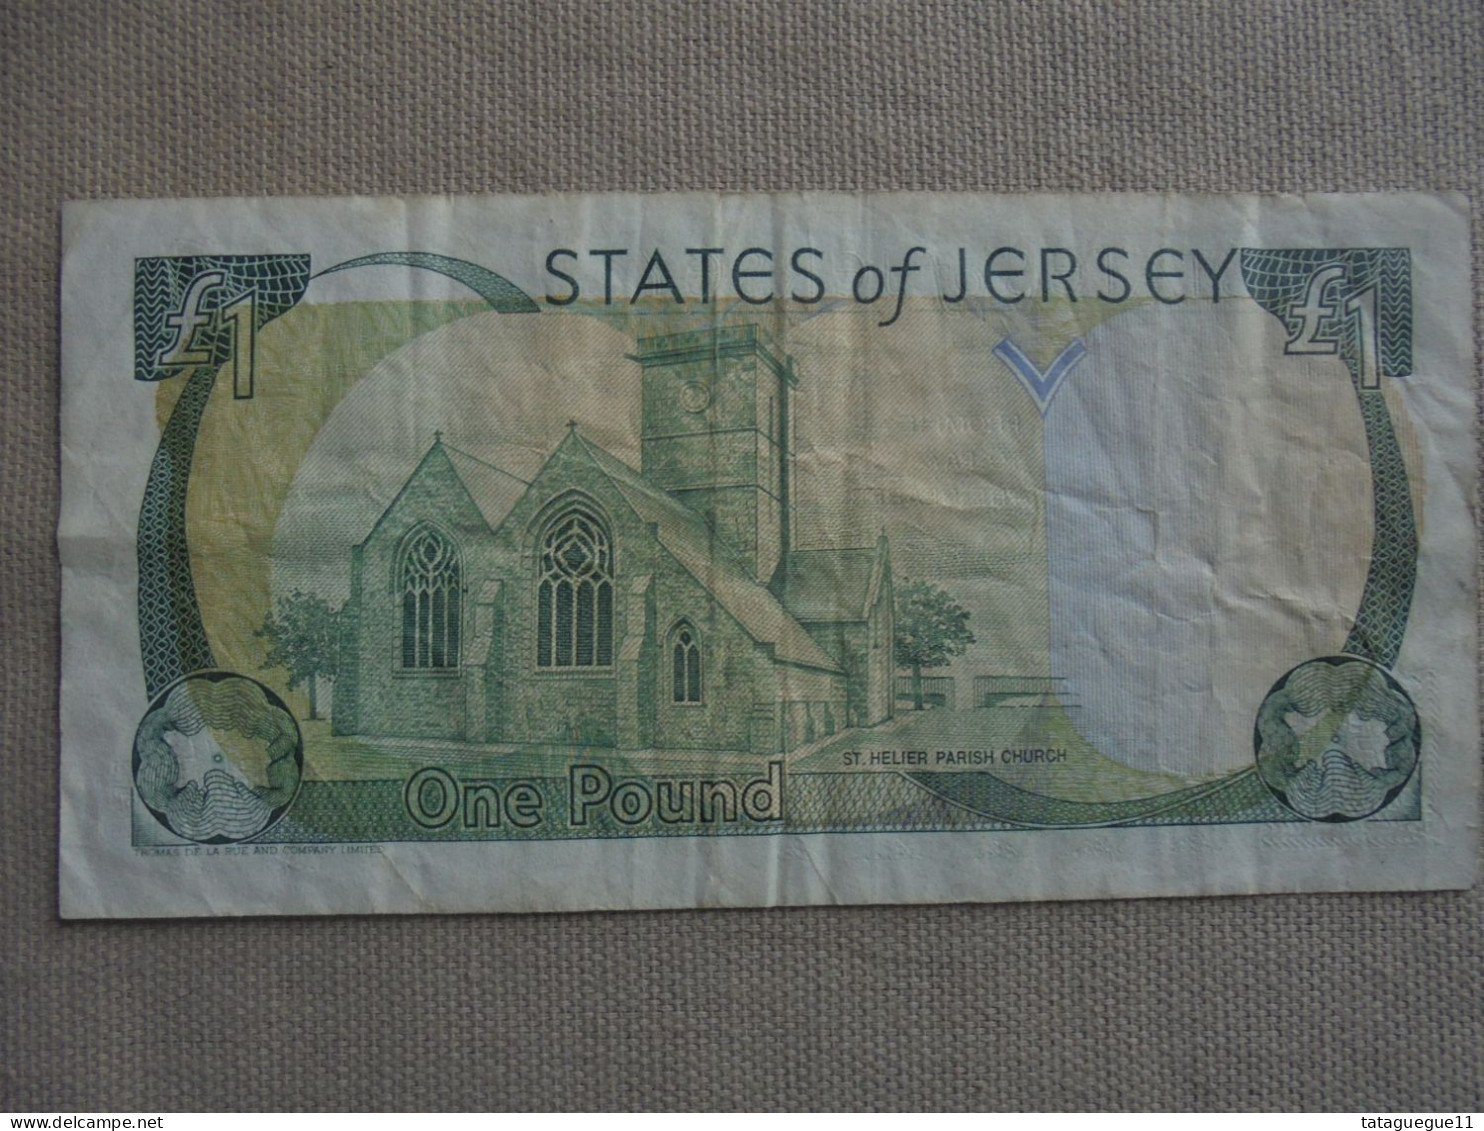 Ancien - Billet De Banque - One Pound The States Of Jersey - George Baird - 1 Pond